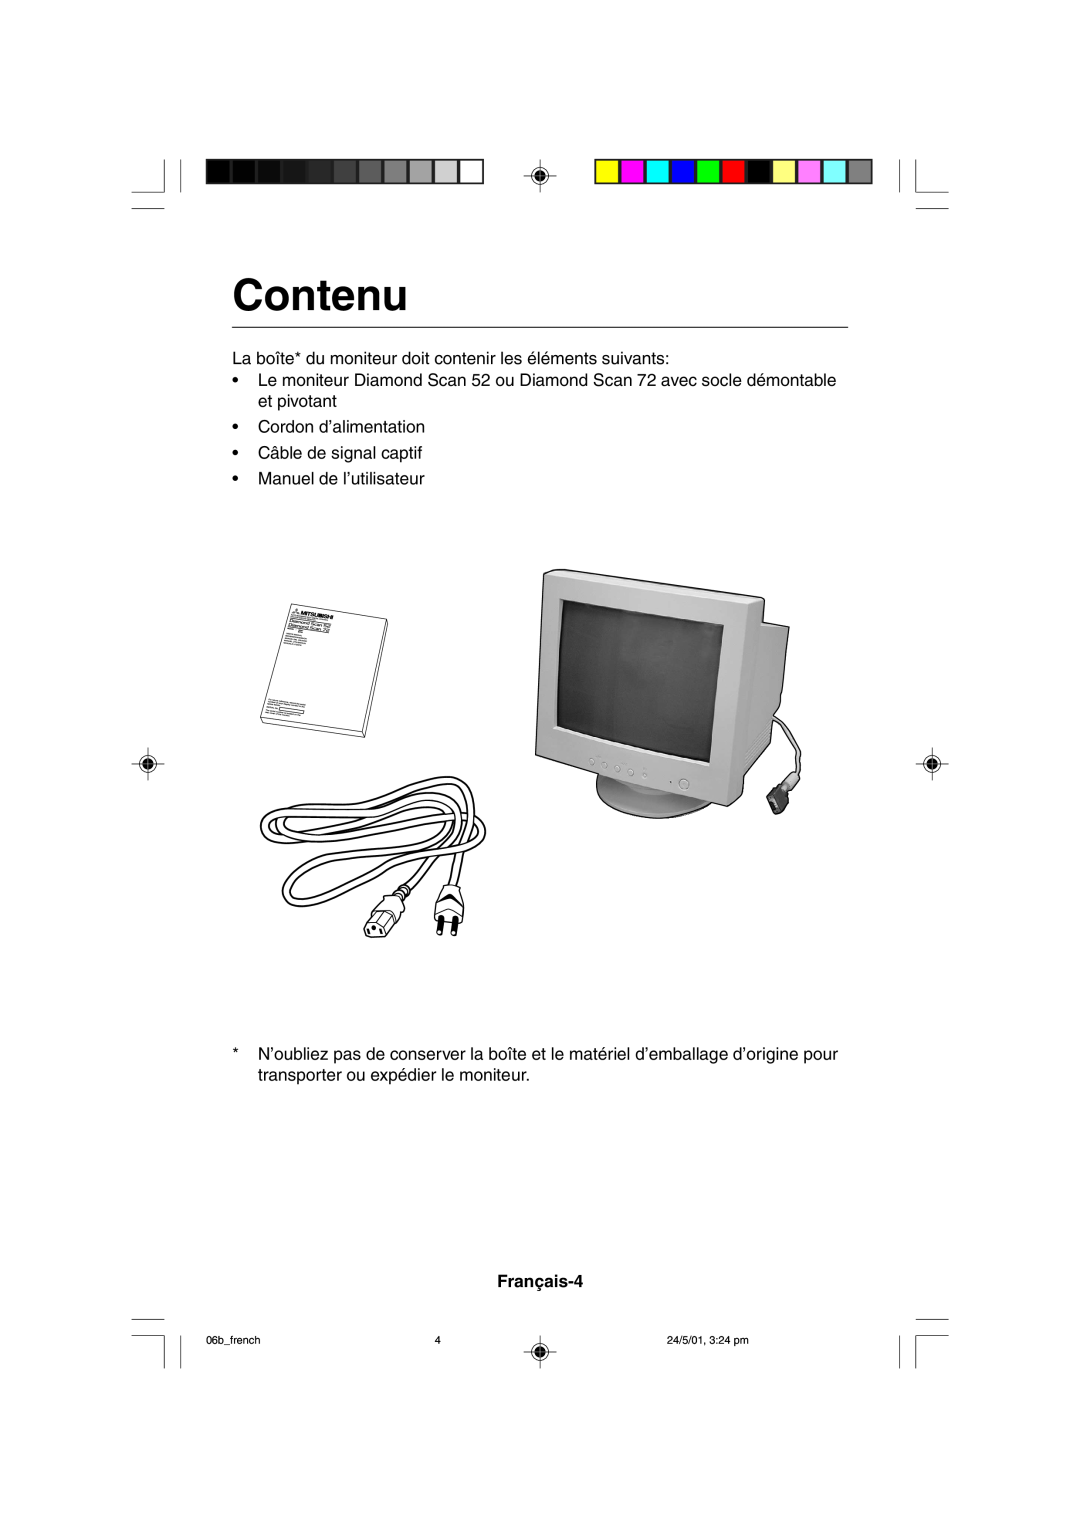 Mitsubishi Electronics M557 user manual Contenu, Français-4, 06bfrench, 24/5/01, 324 pm 